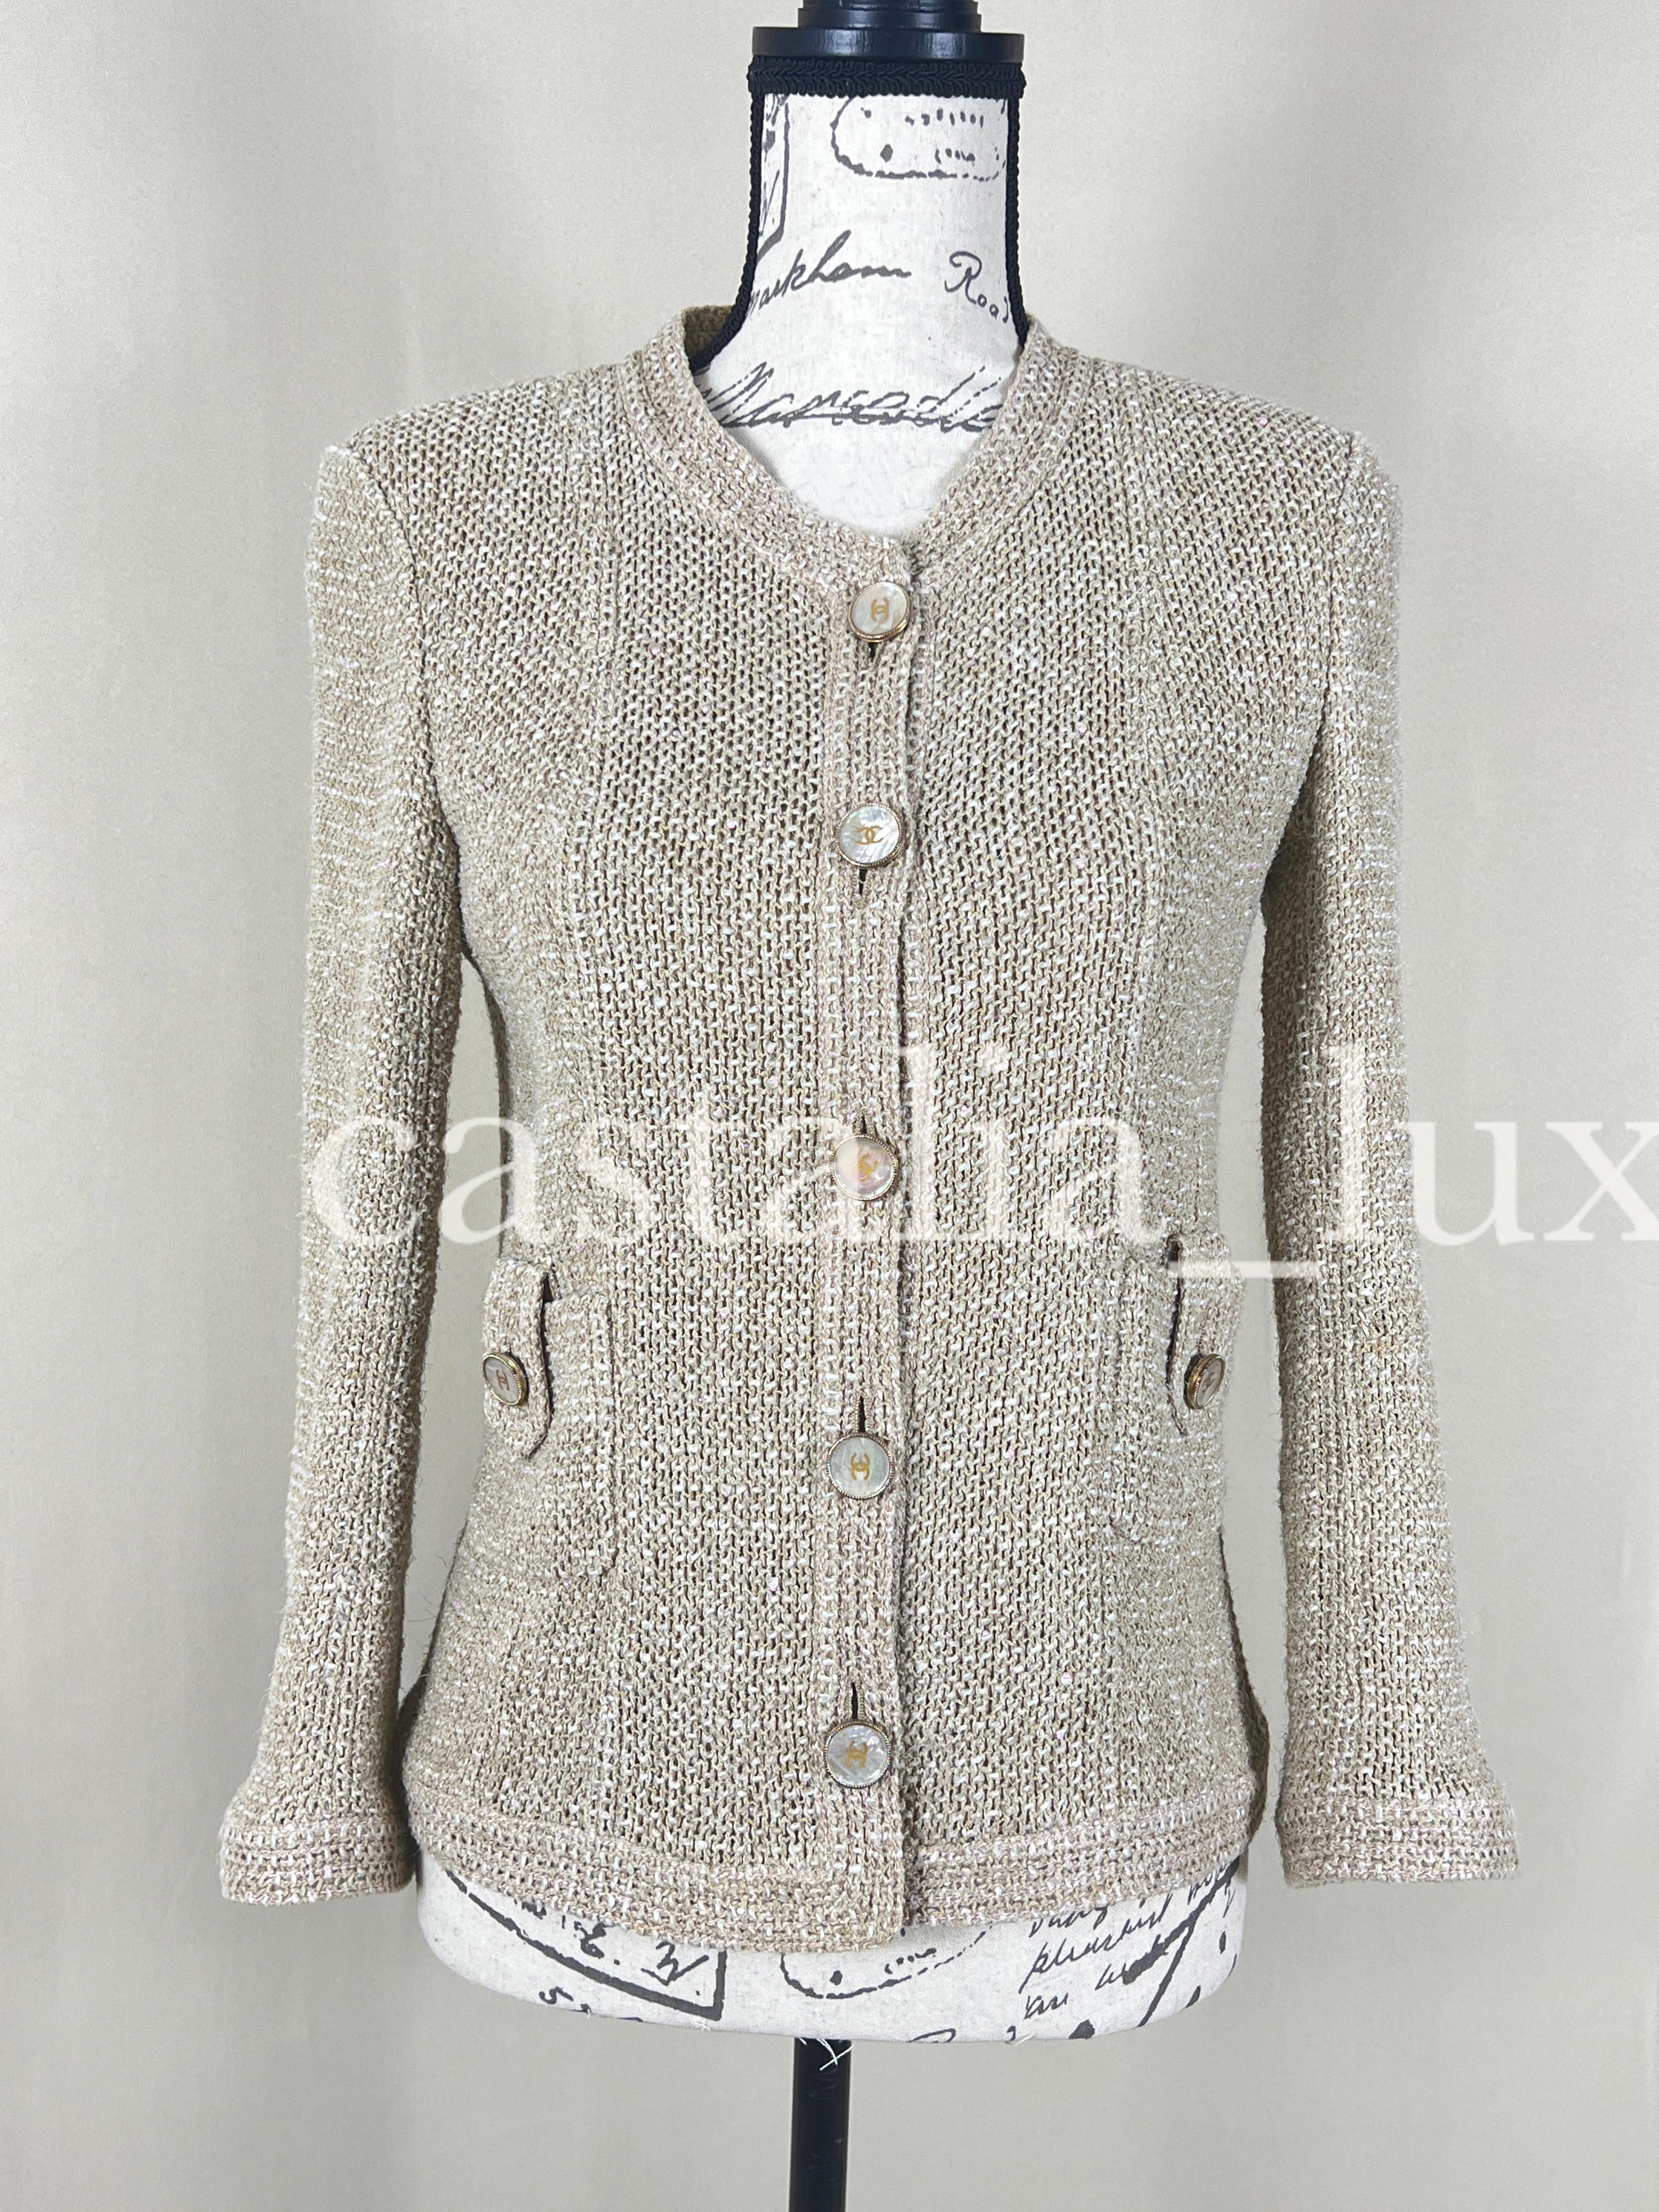 Chanel Iconic Paris / Seoul Beige Tweed Jacket For Sale 3